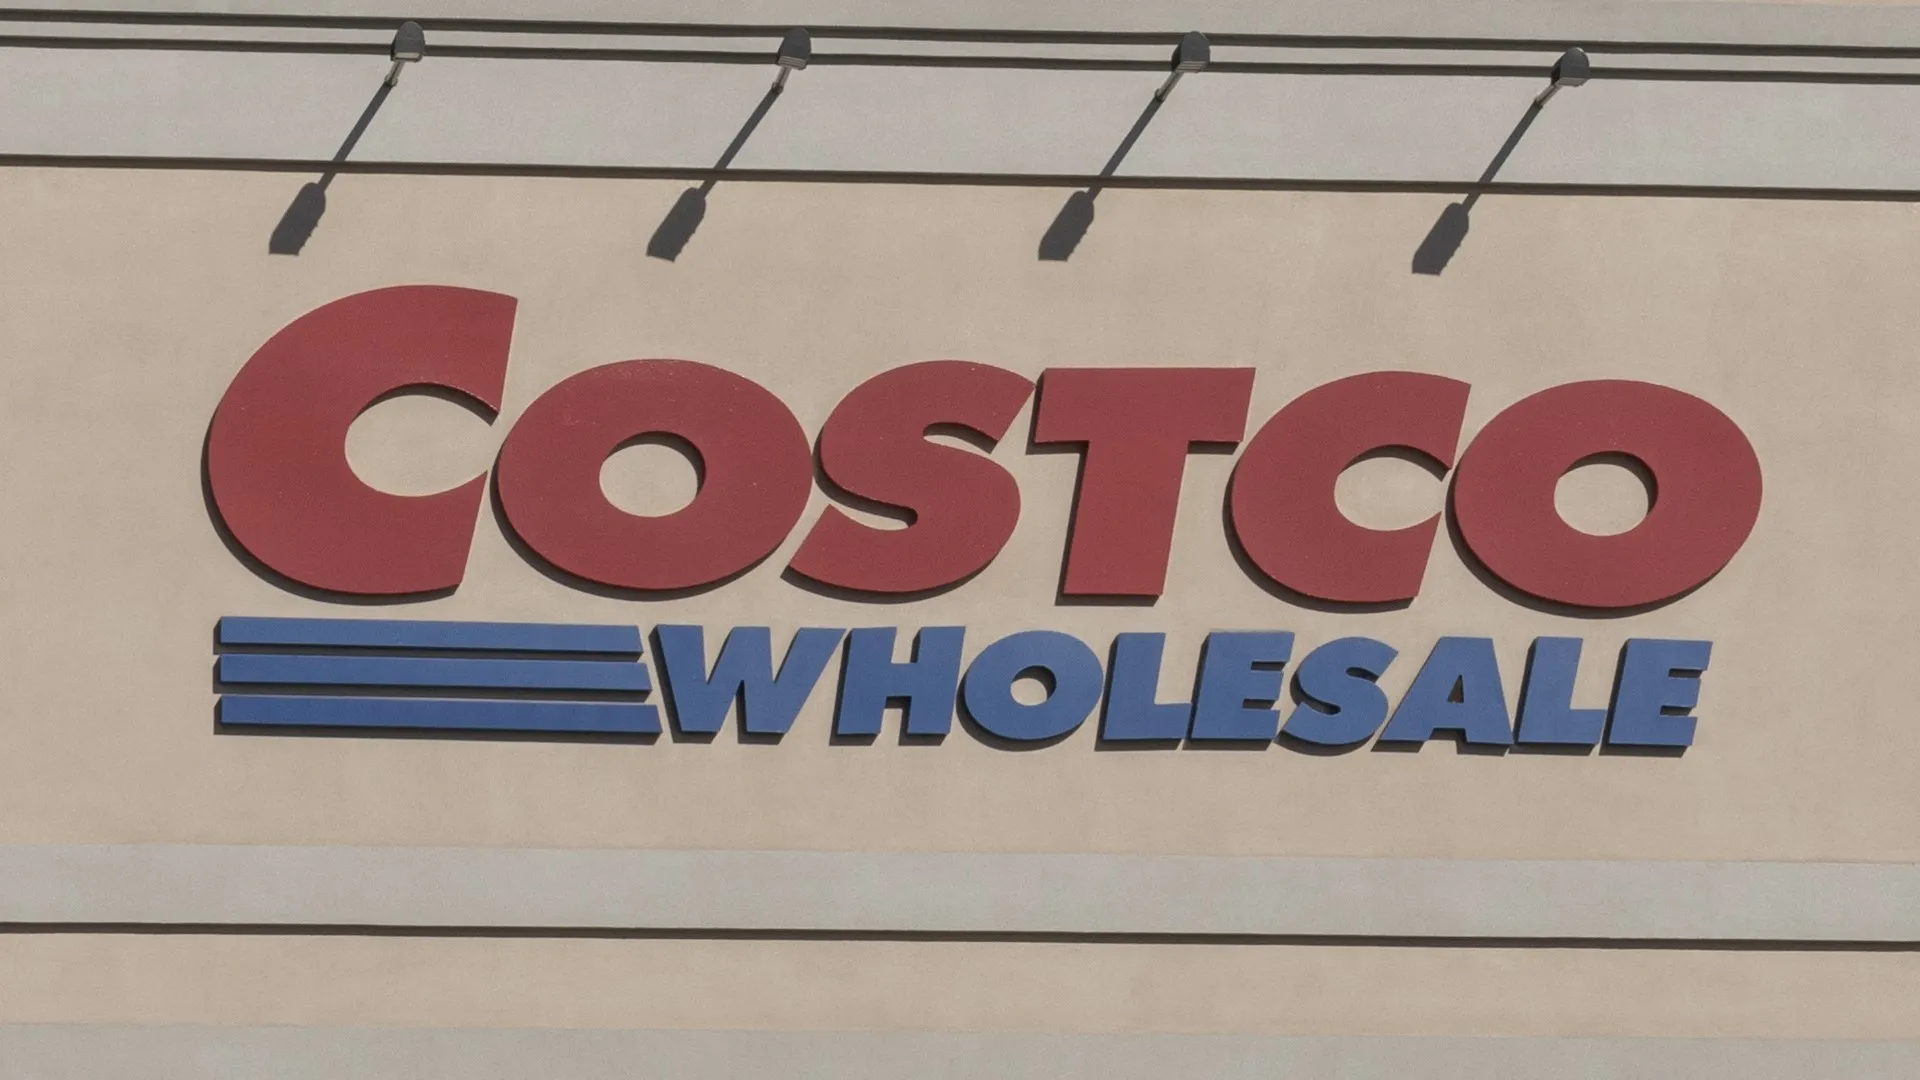 Costco Wholesale Location. Costco Wholesale is a multi-billion dollar membership retailer. stock photo